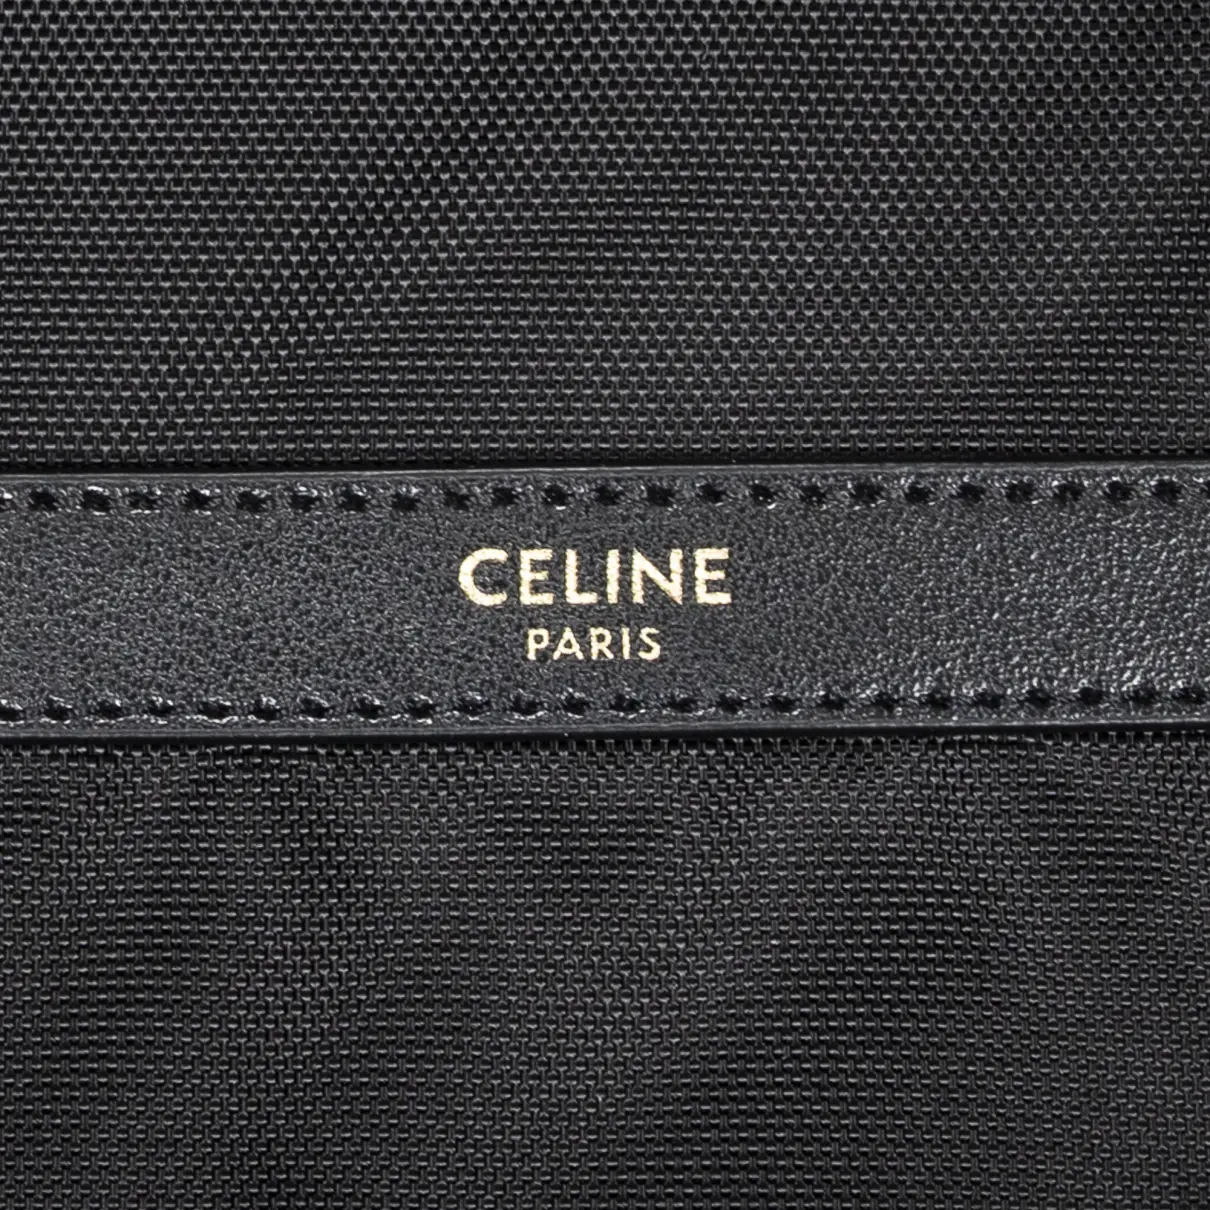 Buy Celine Backpack online